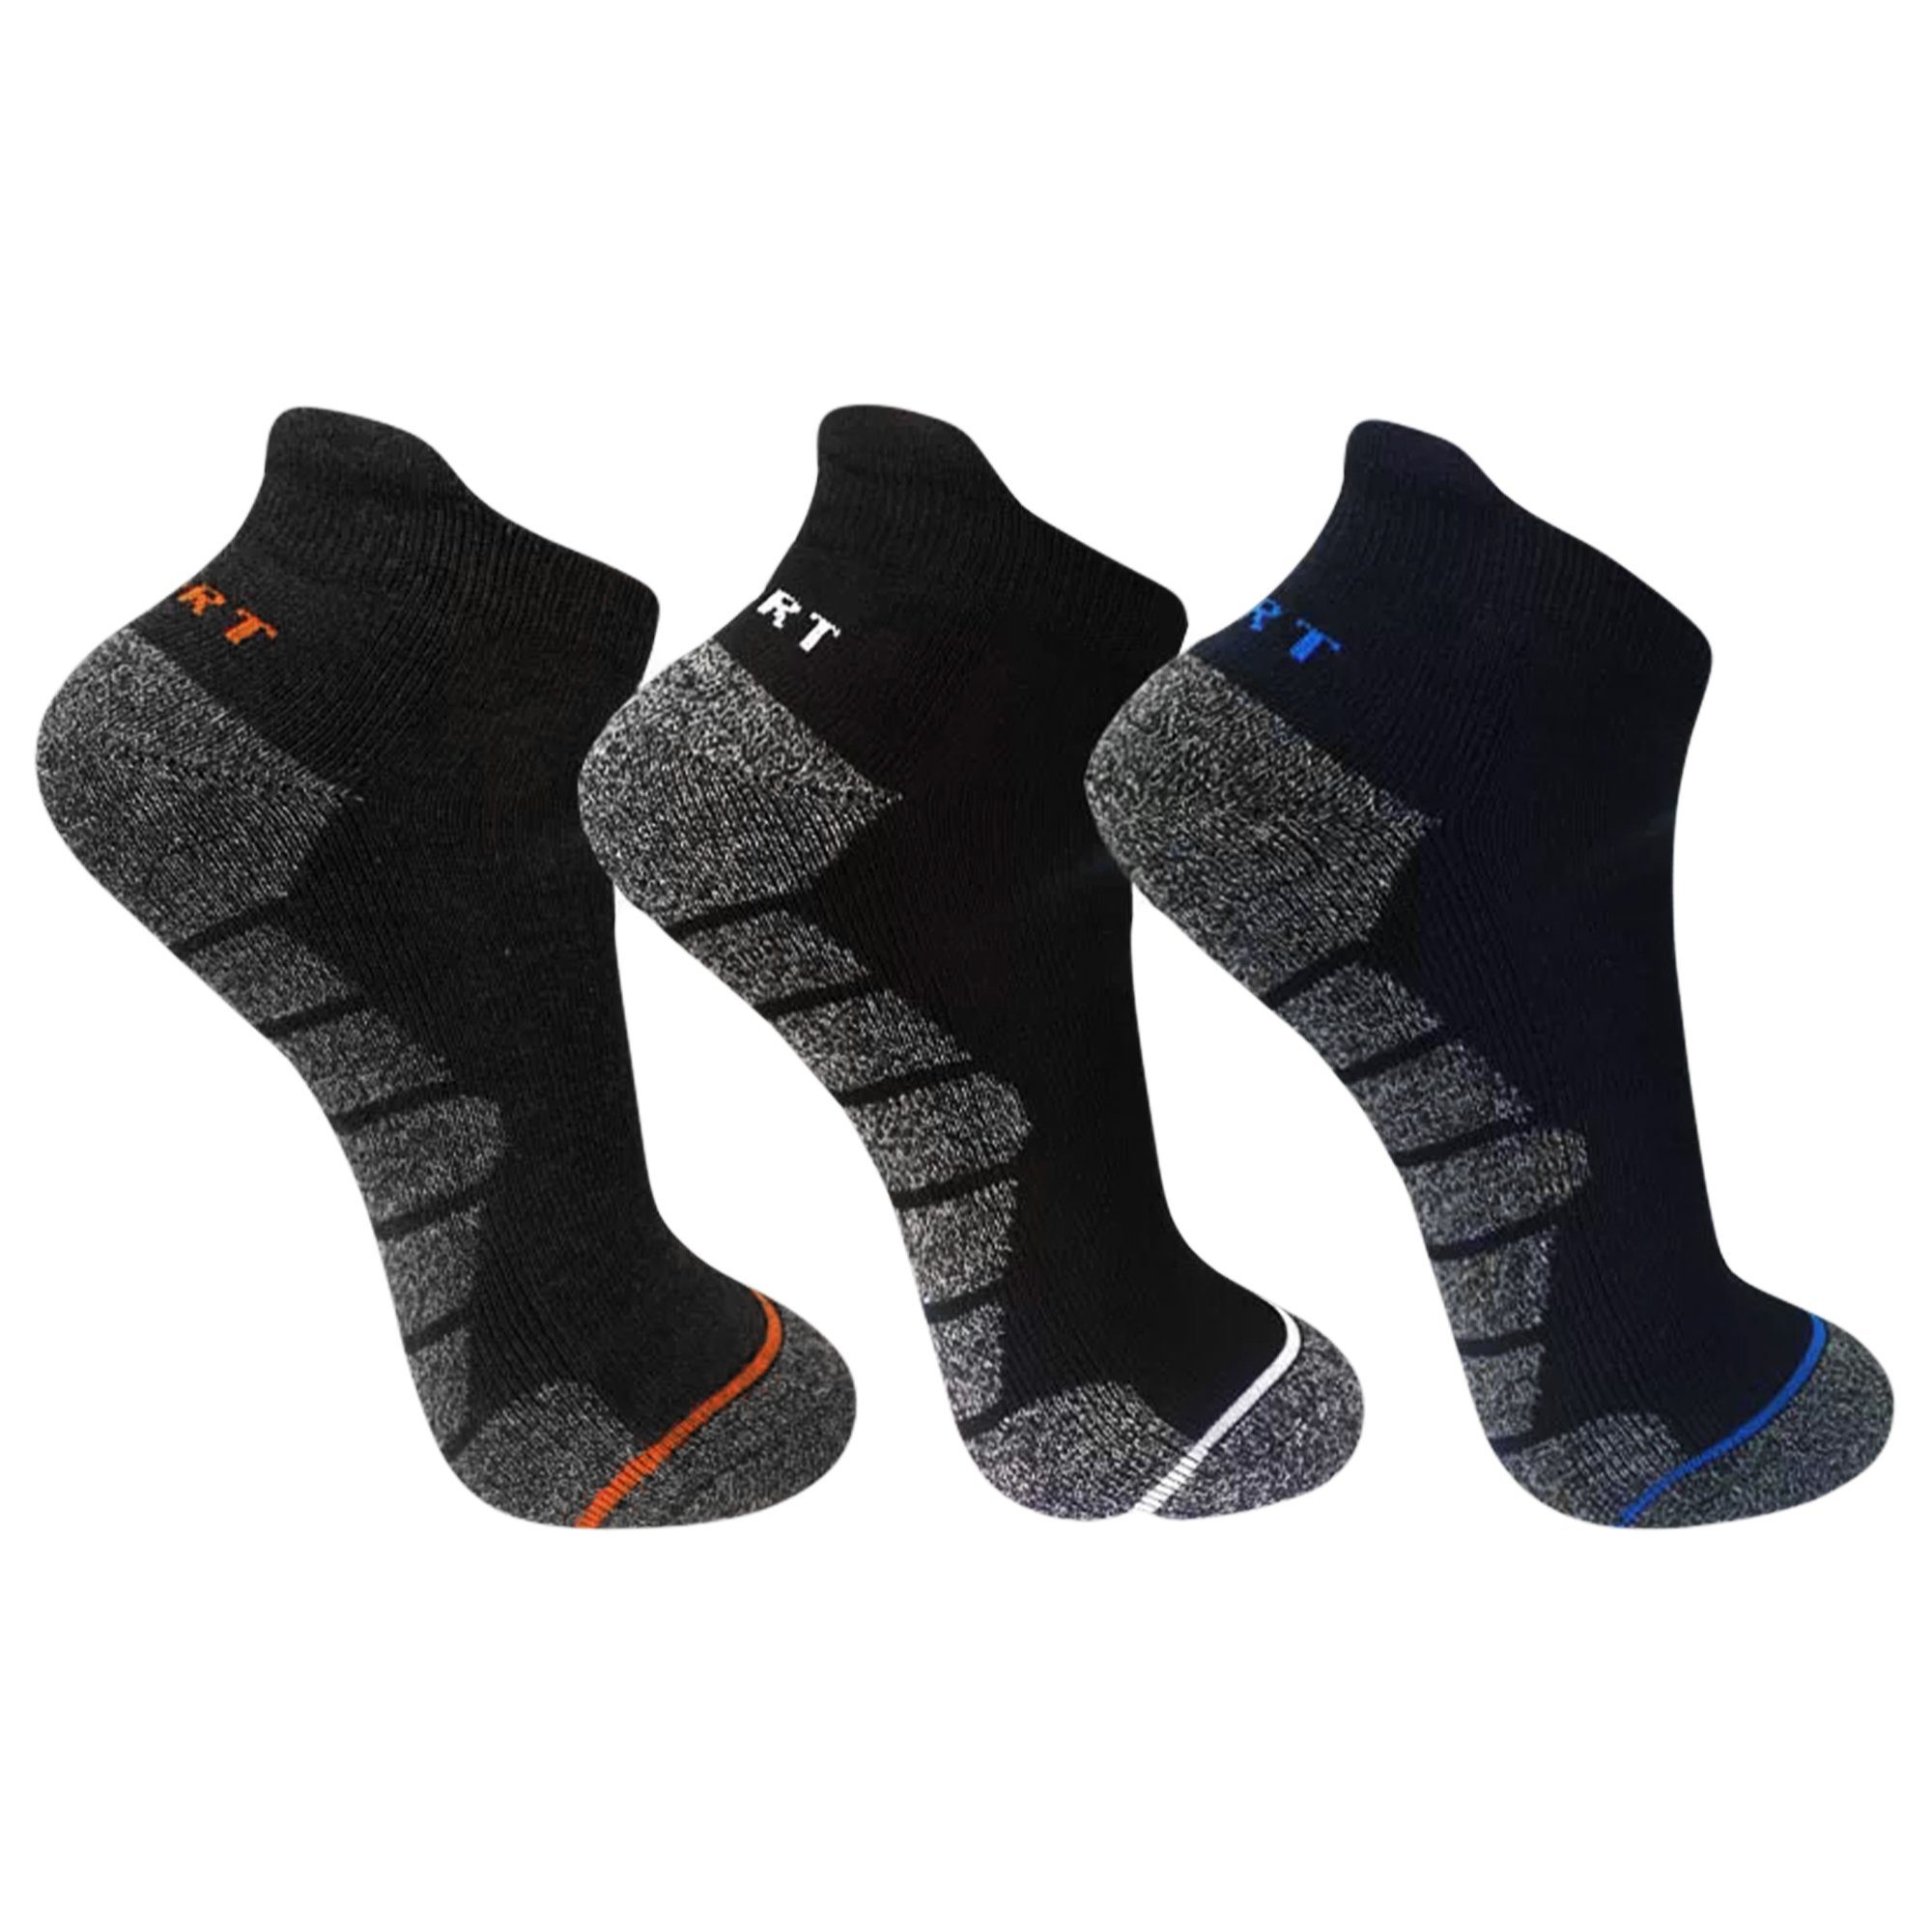 Mit Paar 12 Socken Paar) TEXEMP Sport Dicke Arbeitssocken (Packung, Socken 12 Innenfleece Thermosocken Thermo Winter Socken